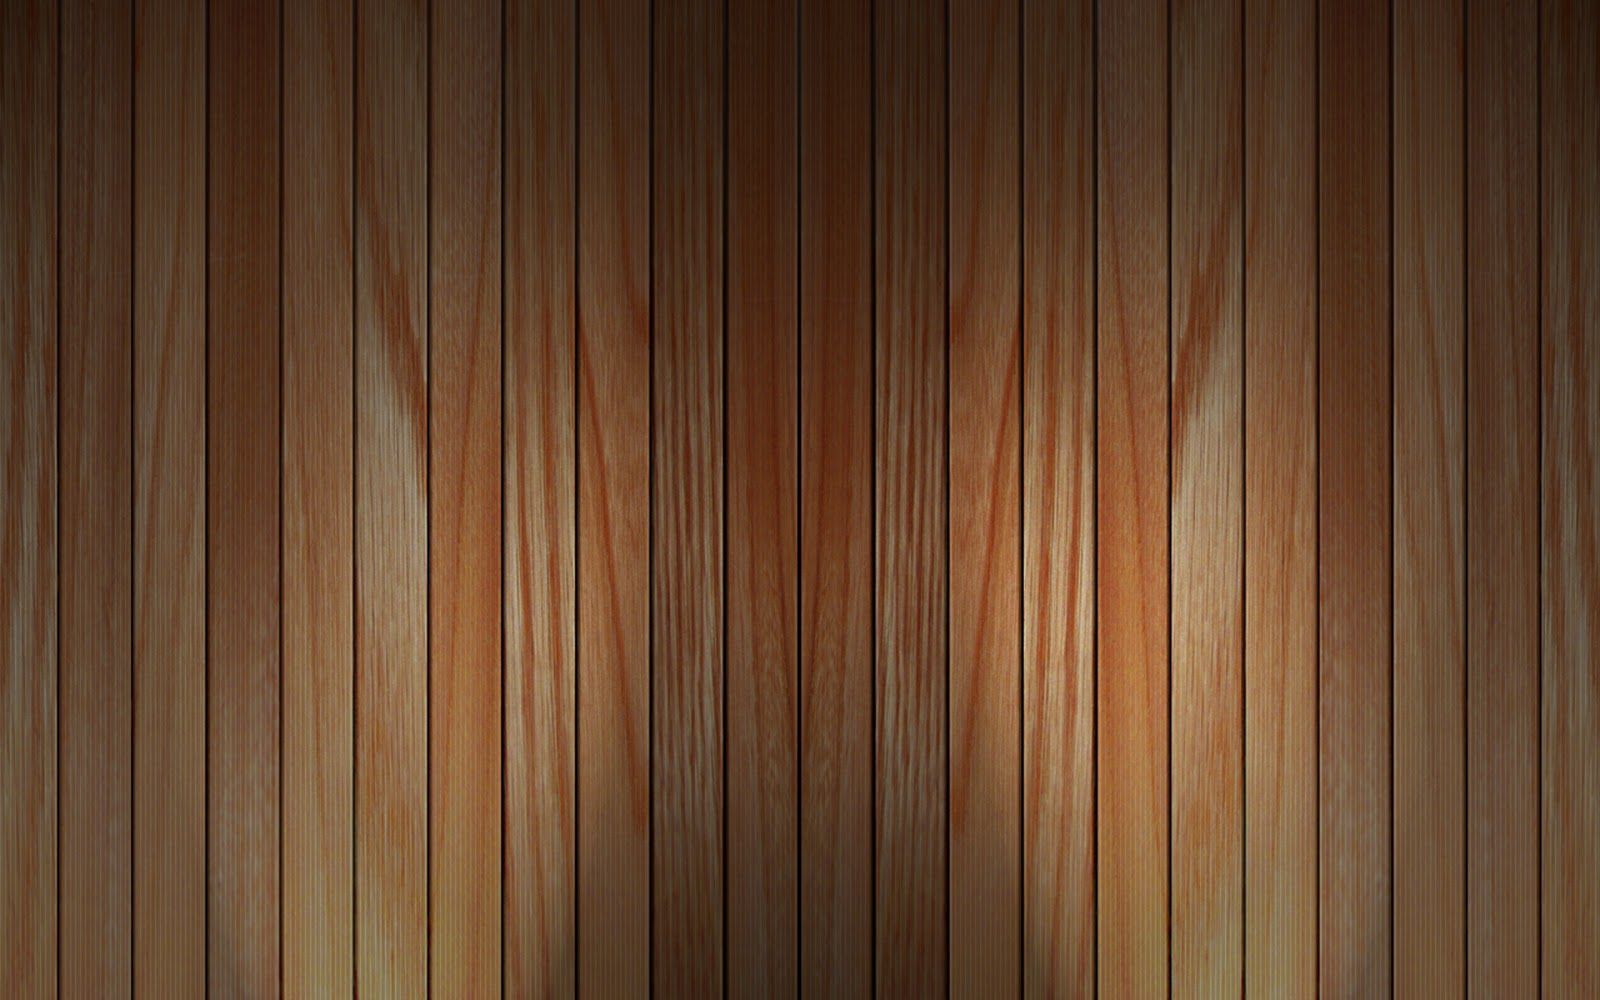 Hd Wallpaper Wood Imagenes Wallpaper